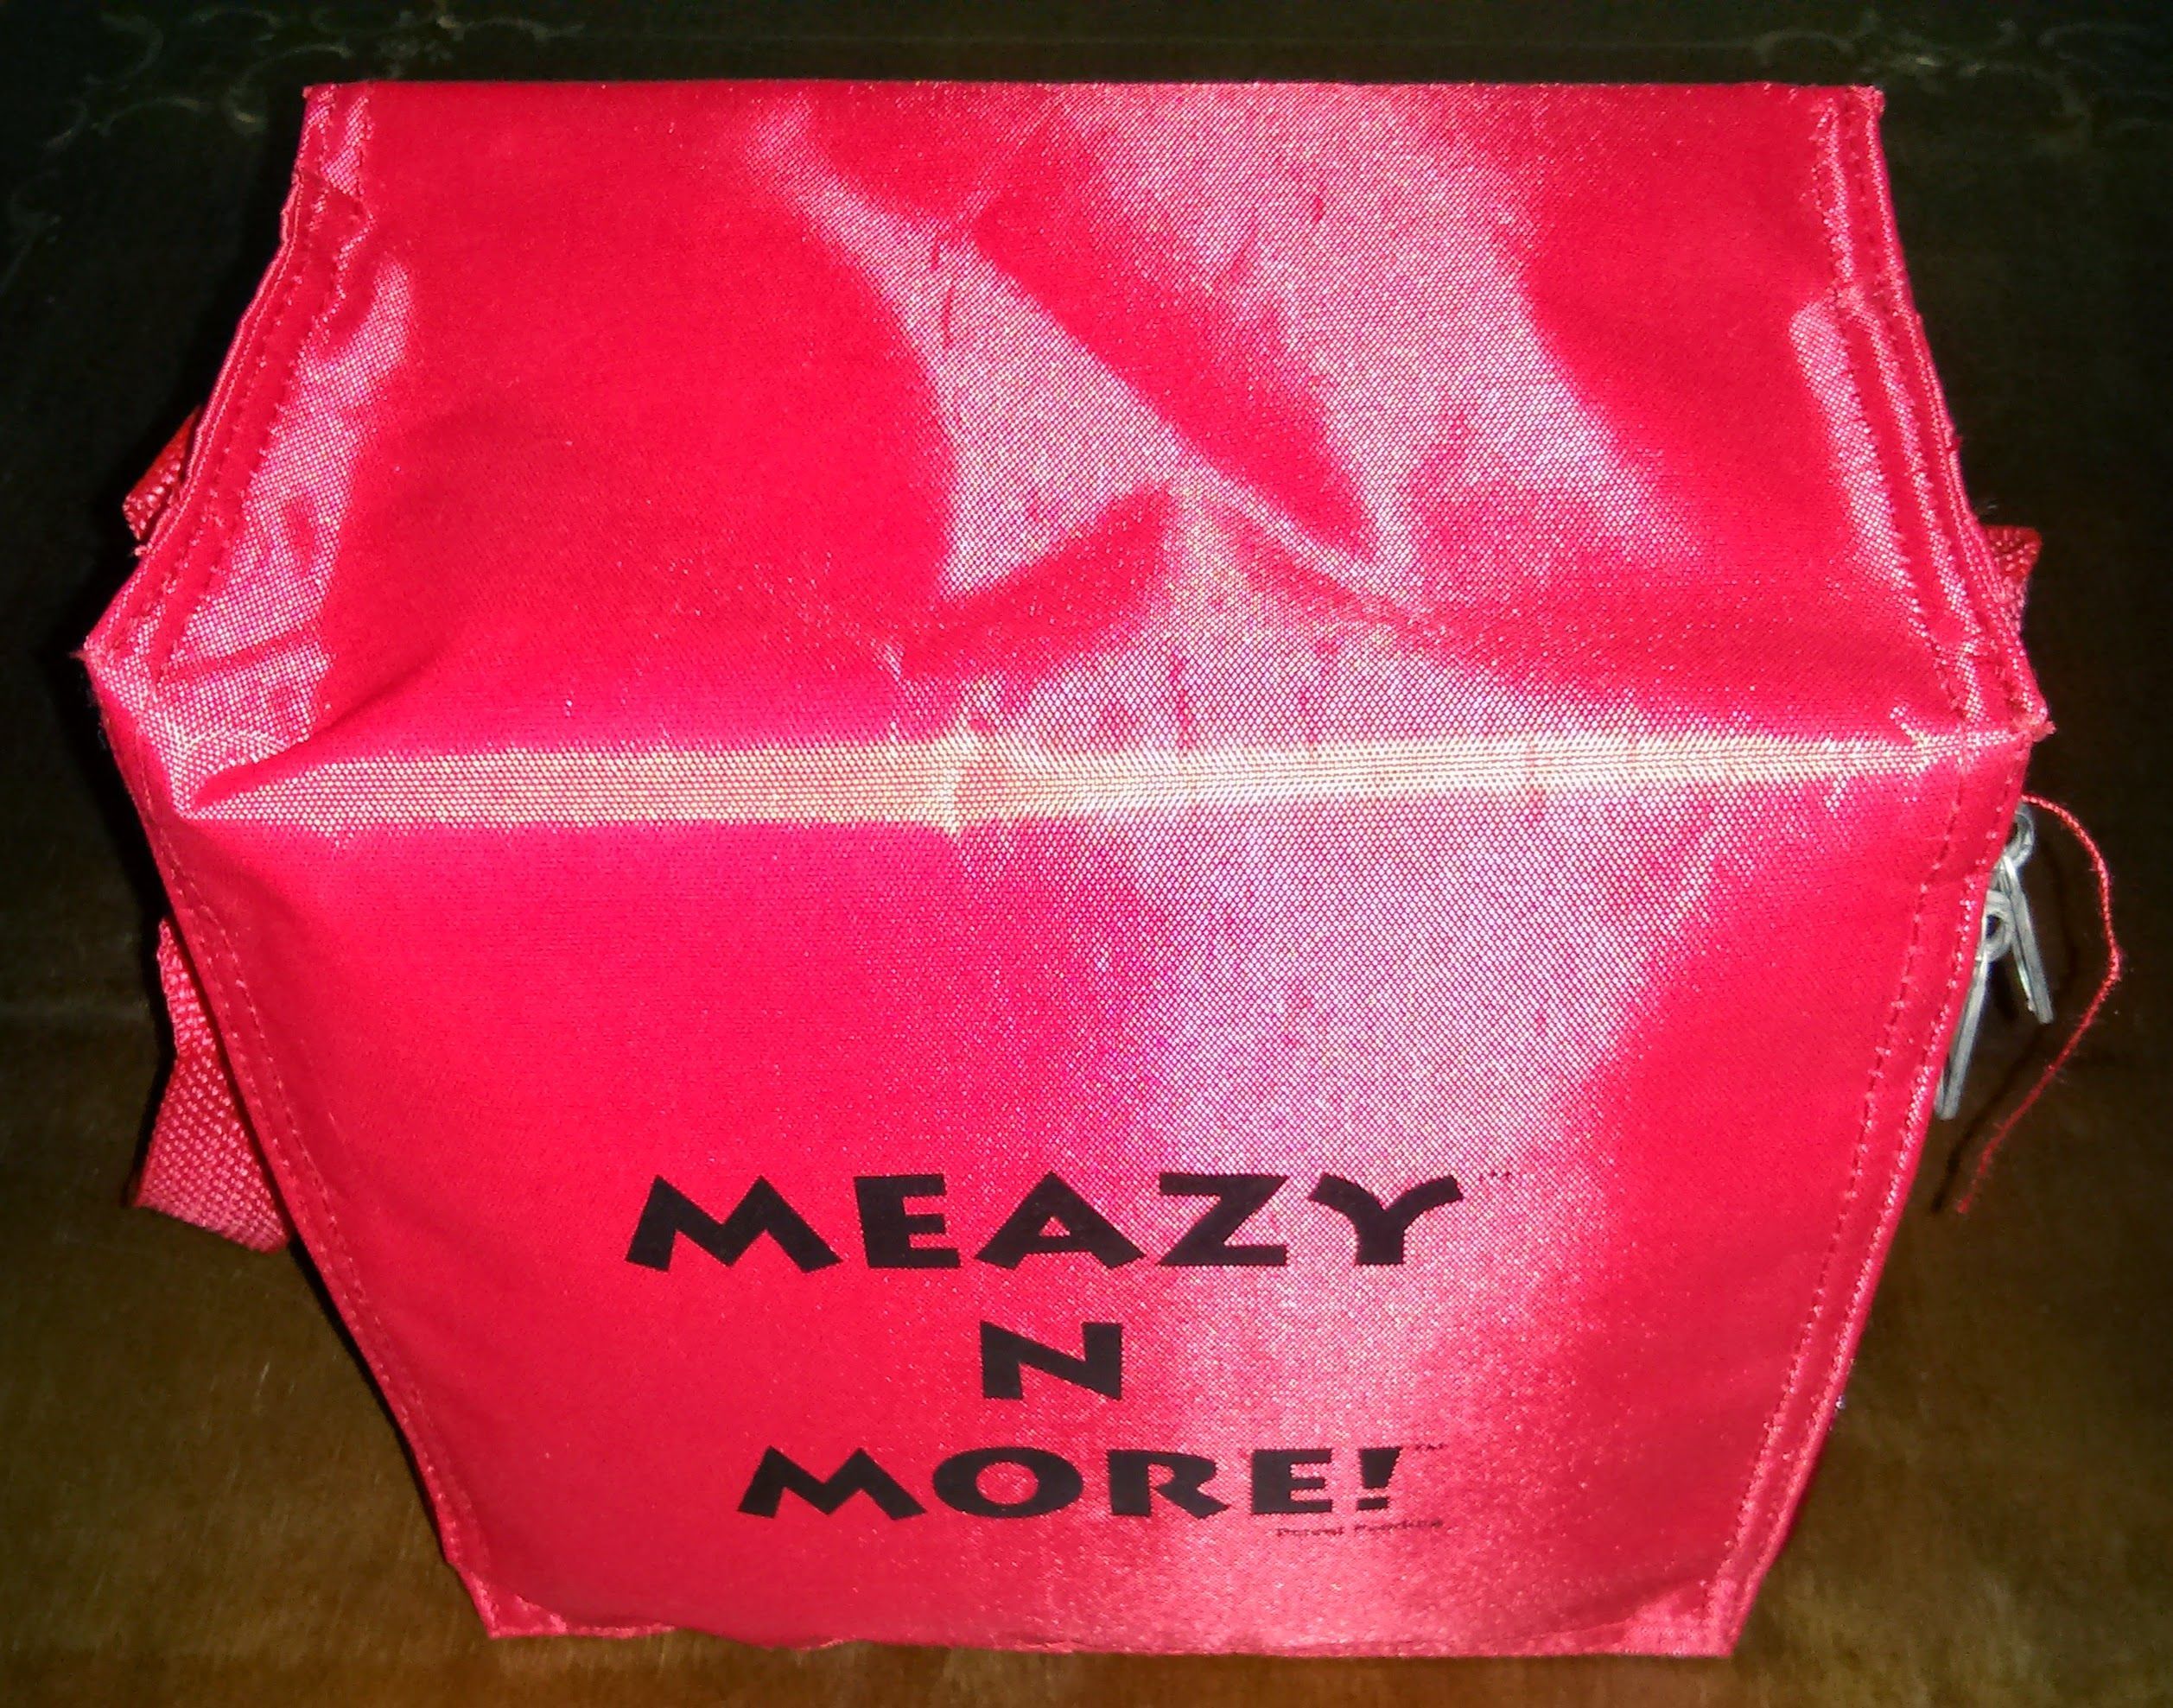 Meazy N More!